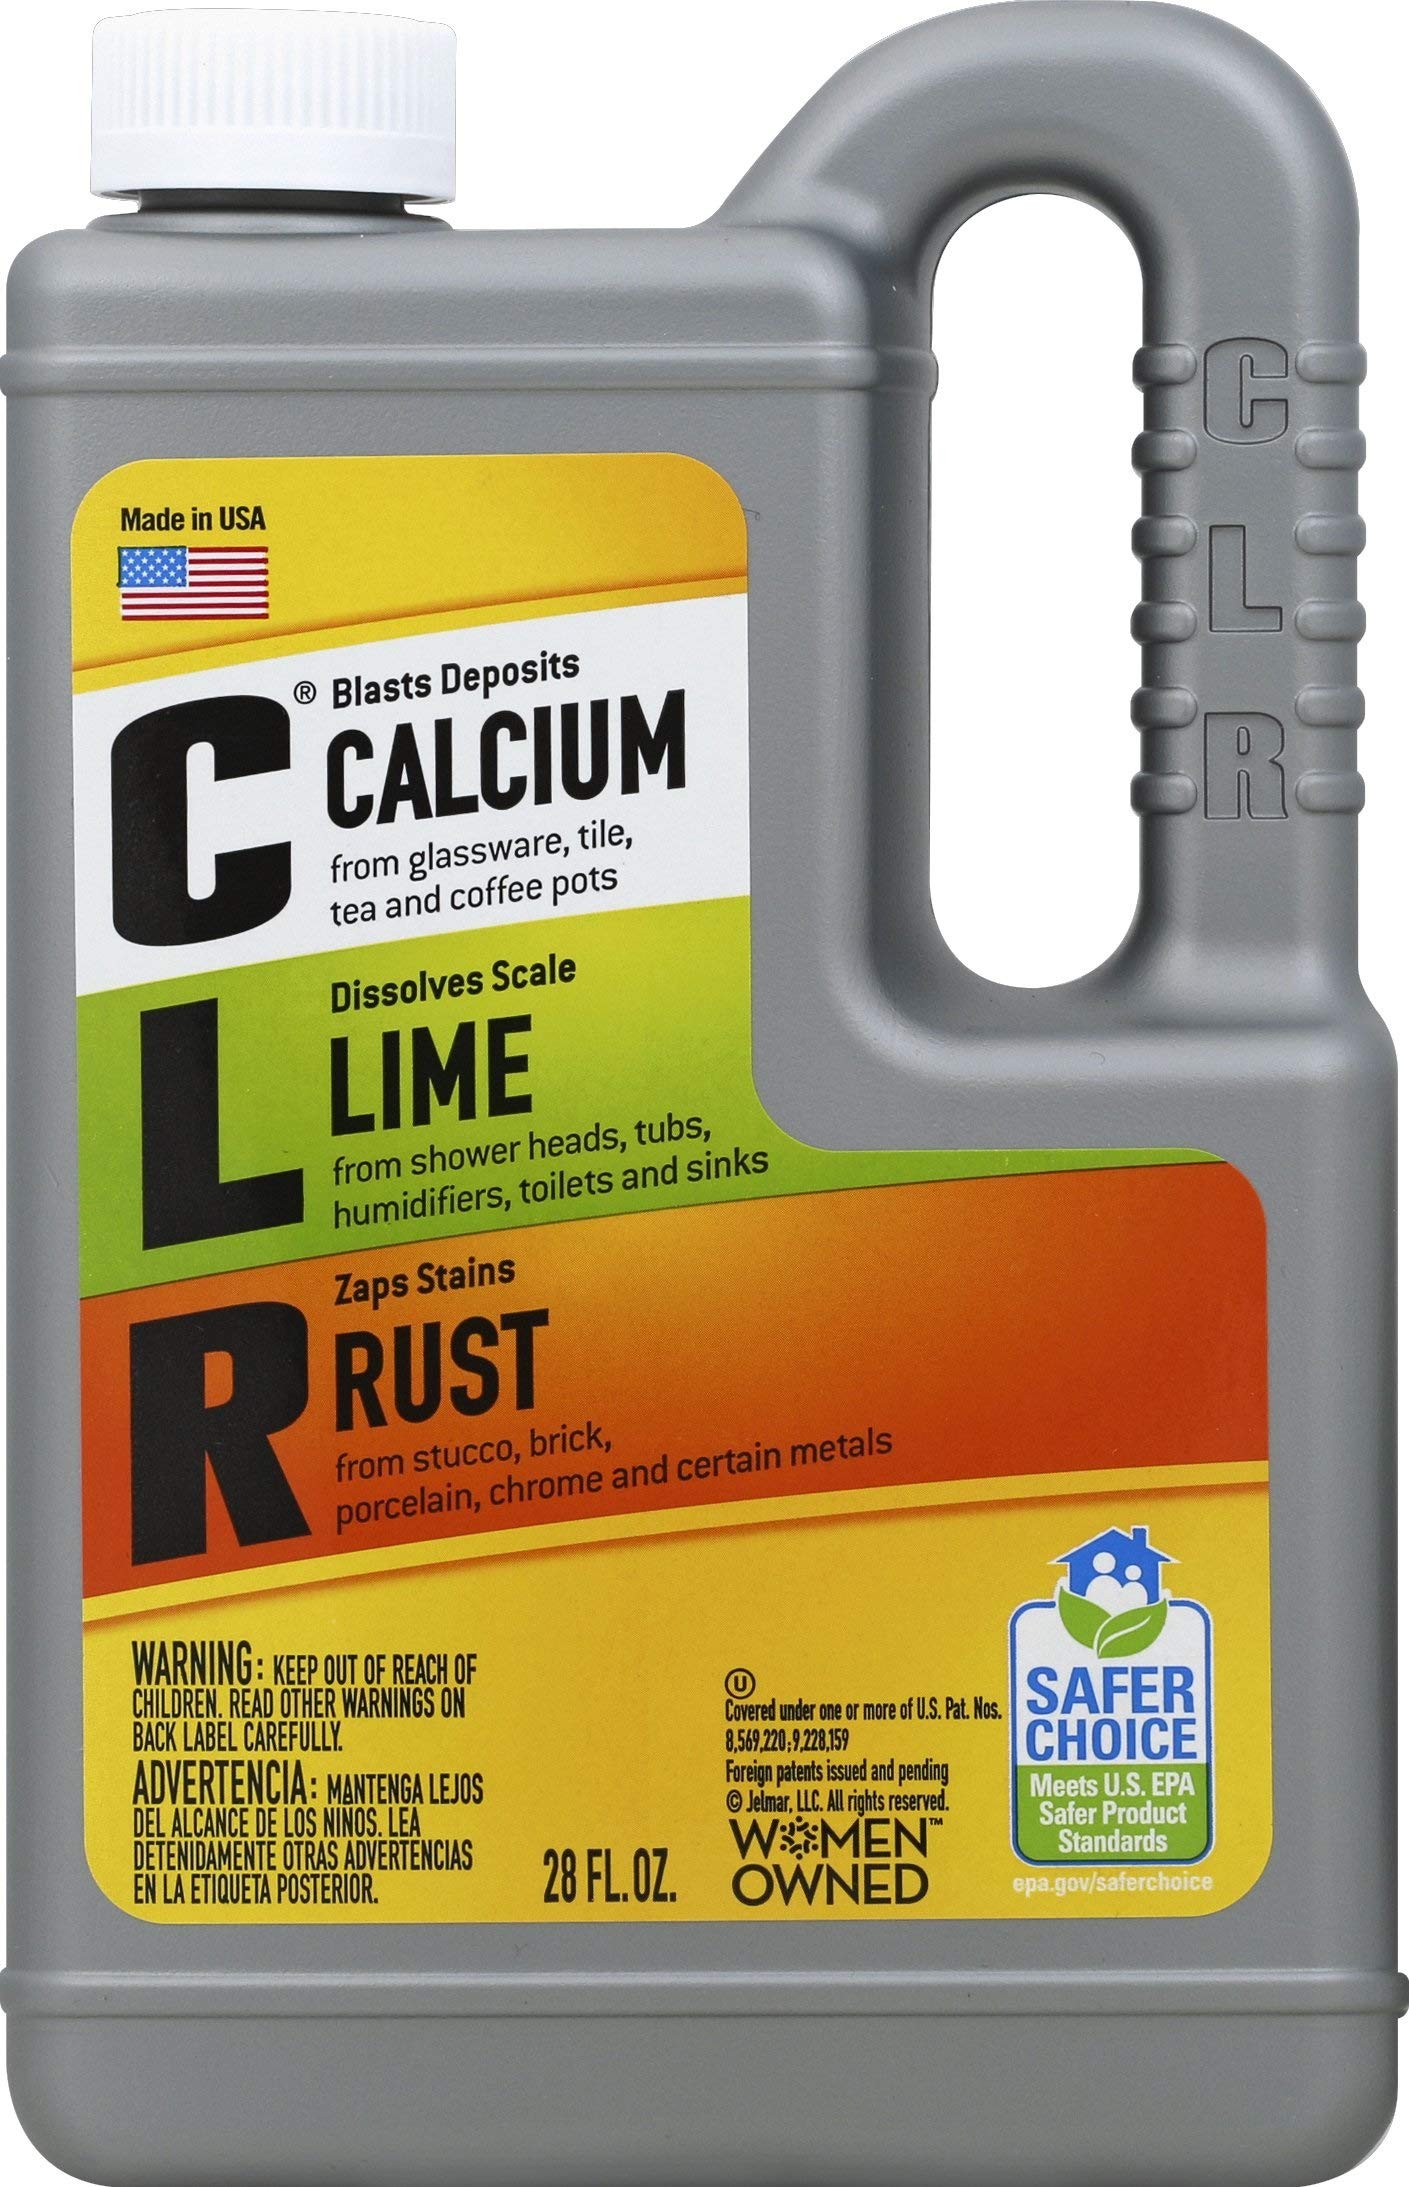 CLR Calcium, Lime & Rust Remover, Biodegradable, 28 Oz Bottle (1)